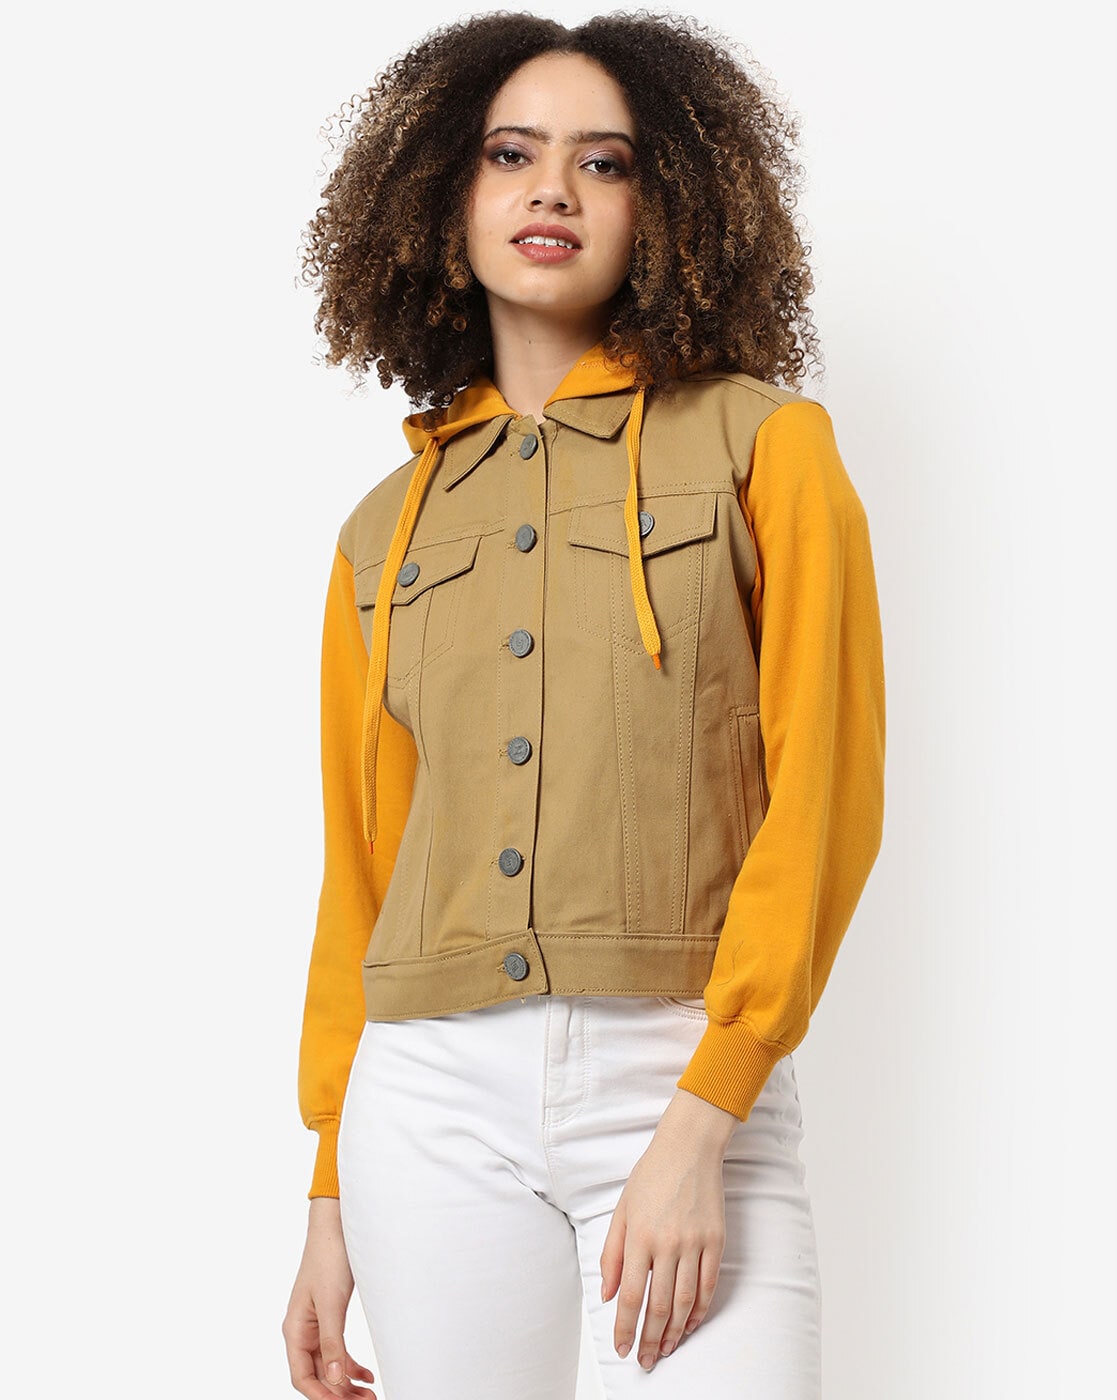 BEBE Denim Mustard Yellow Jean Jacket Neck Tie Collar Puff Slv Fashion  Women's S | eBay